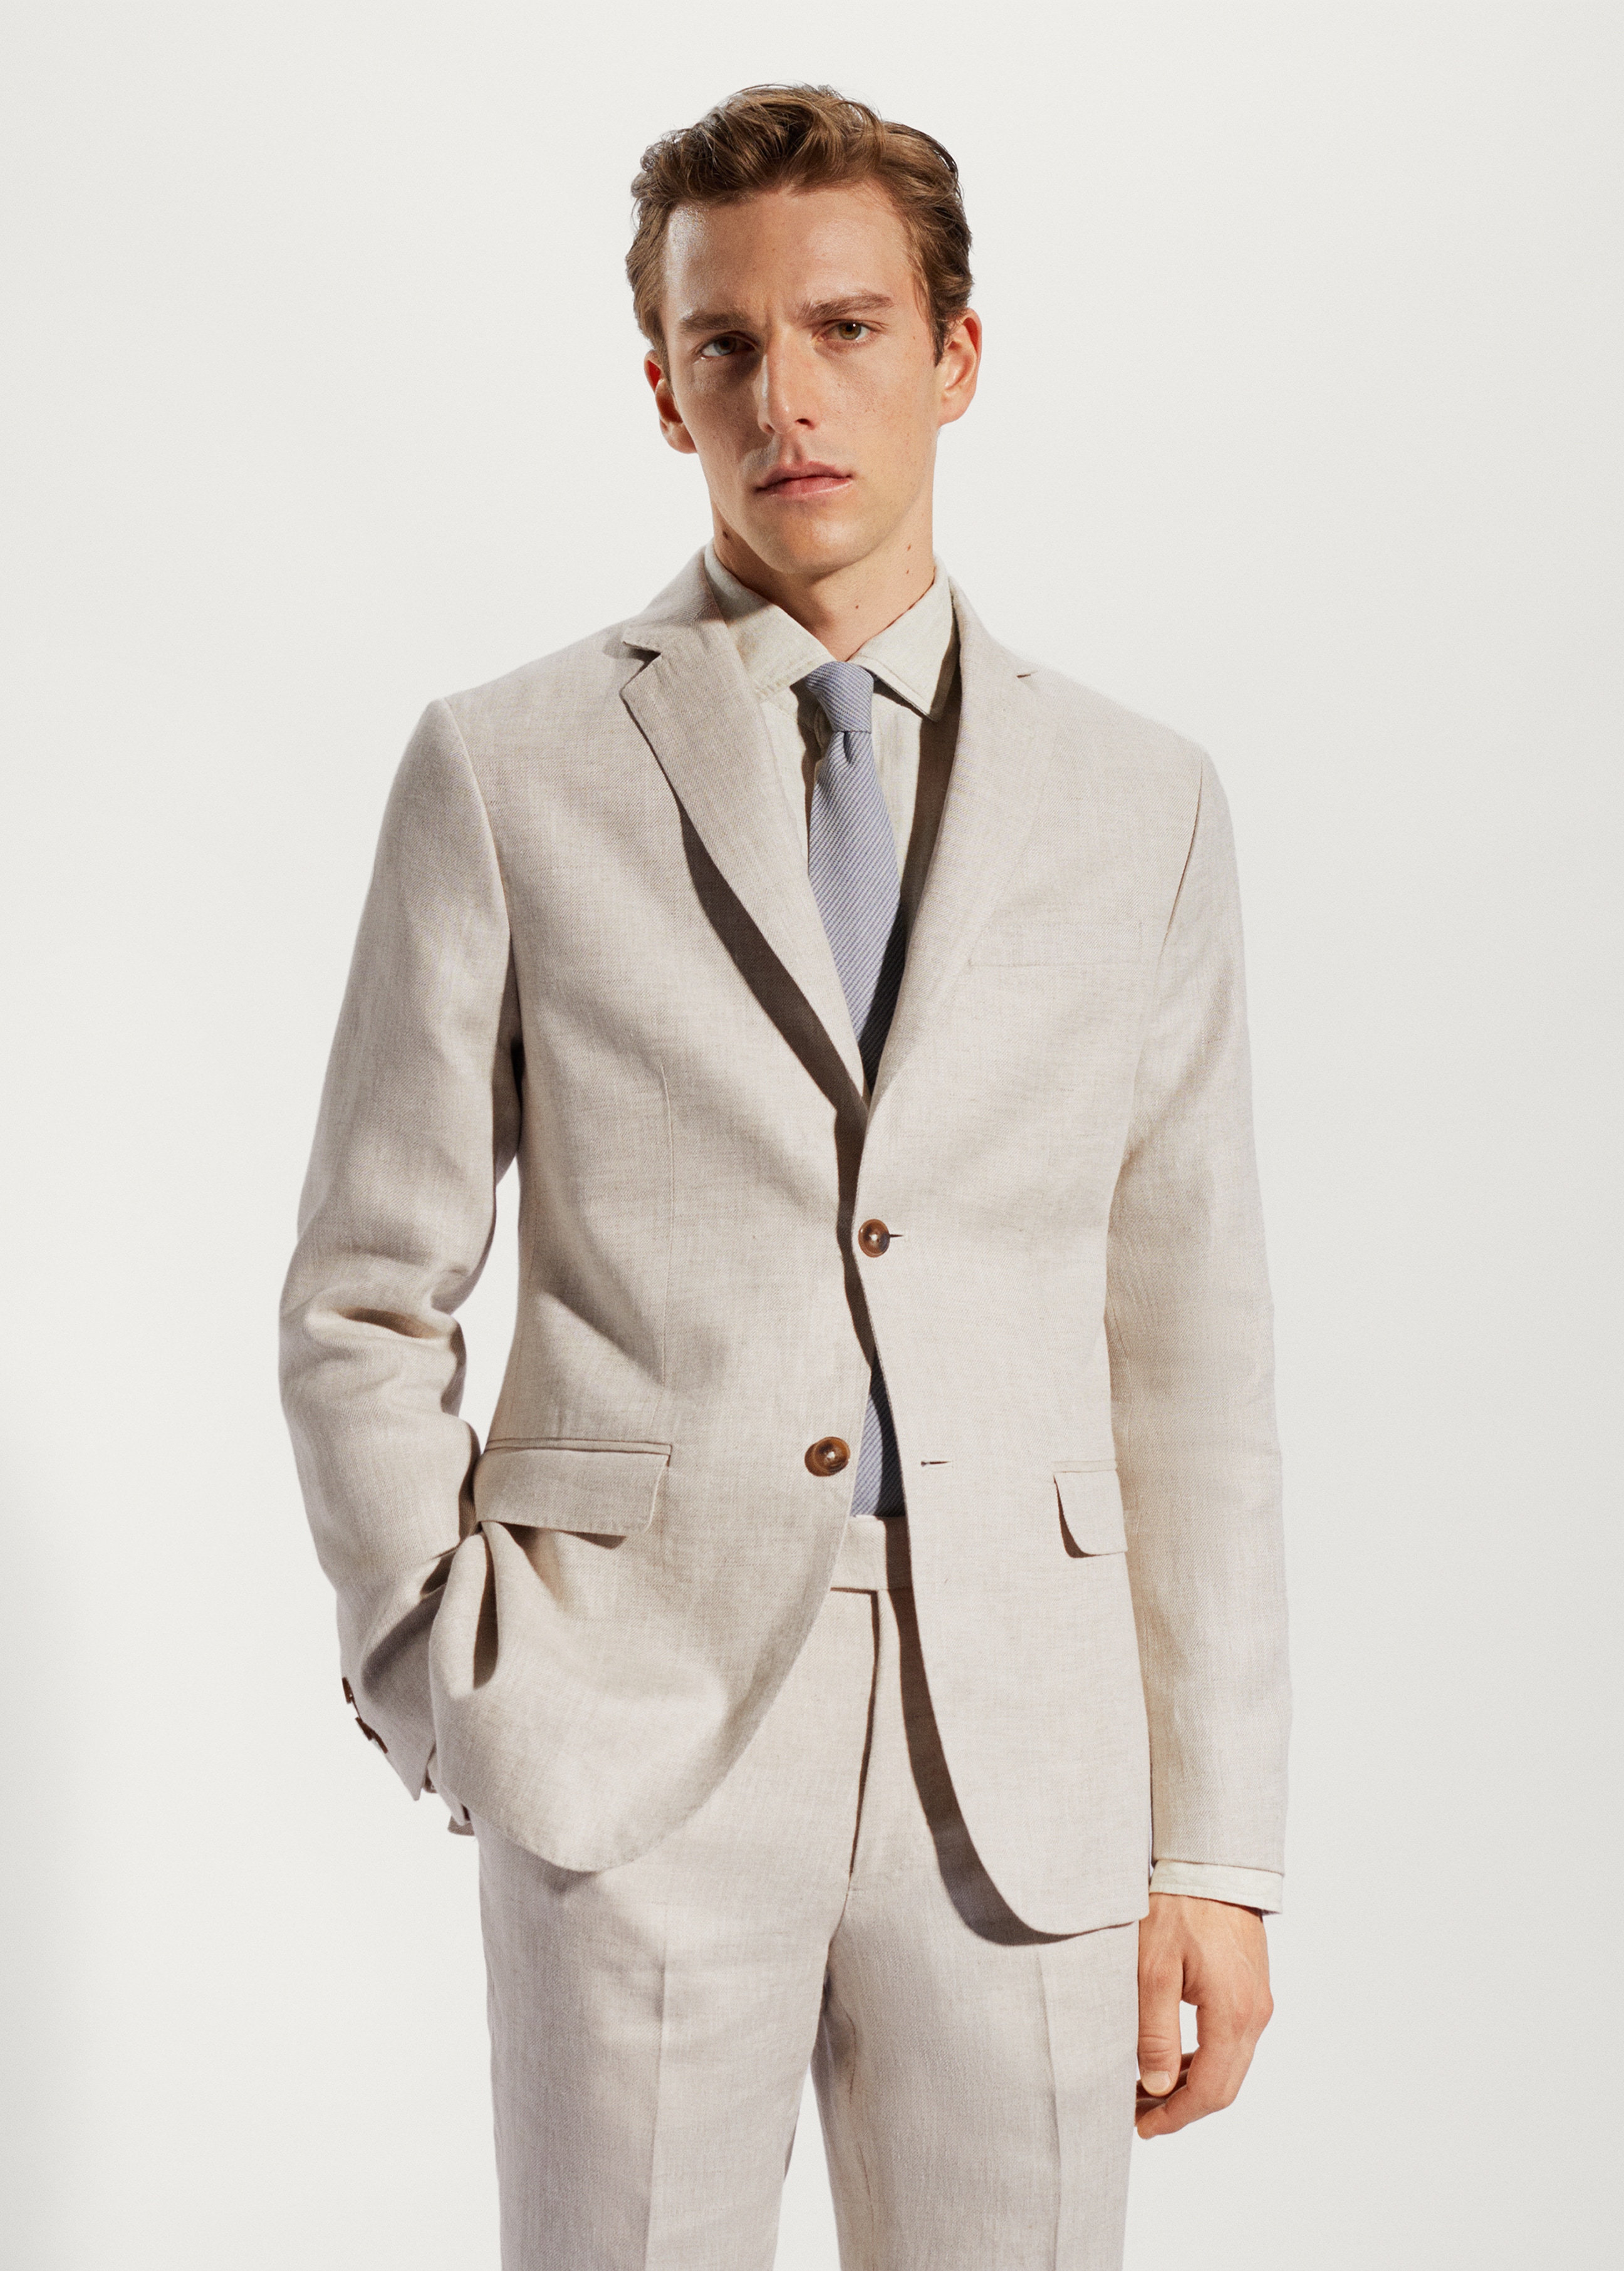 100% linen suit blazer - Medium plane